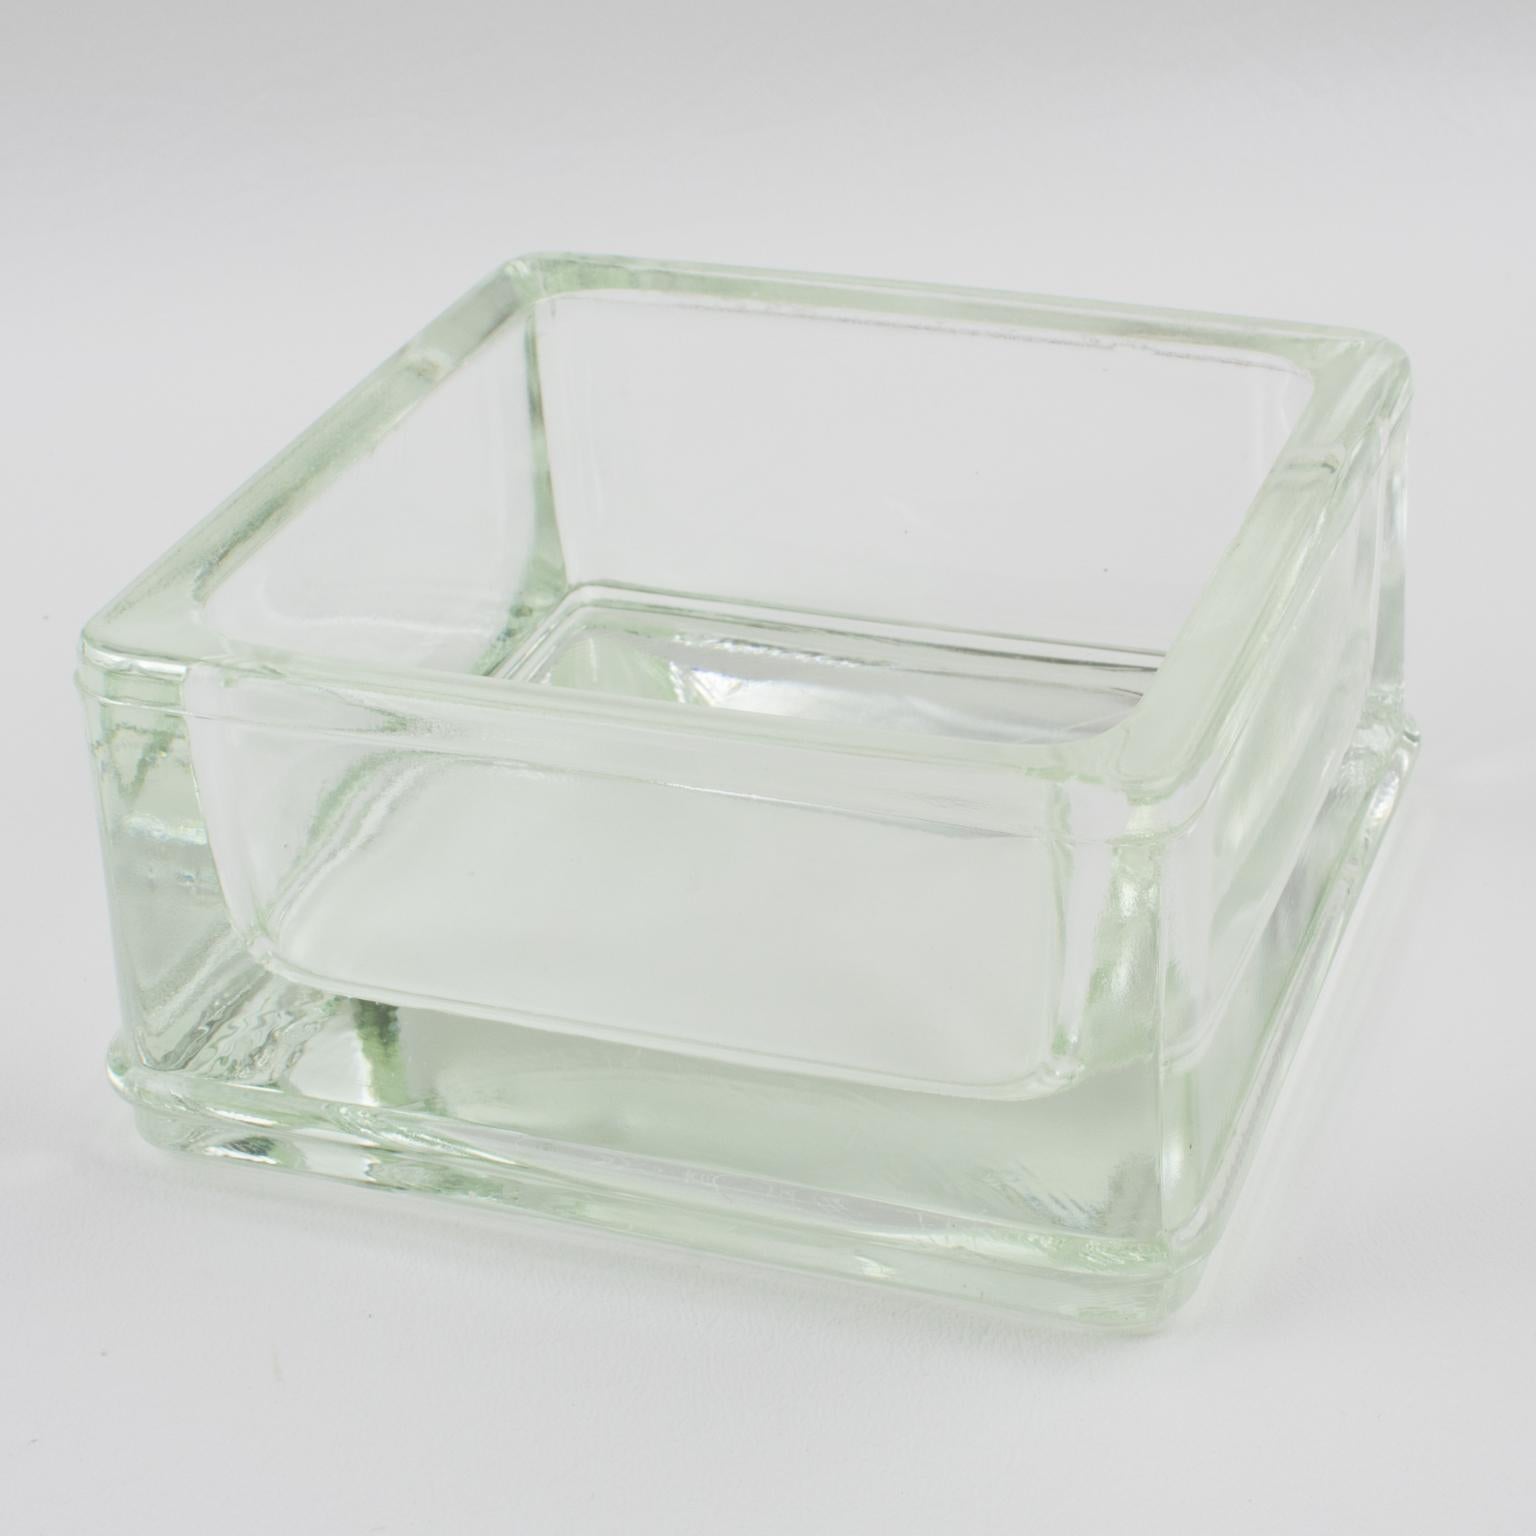 Le Corbusier for Lumax Molded Glass Desk Accessory Ashtray Catchall For Sale 2